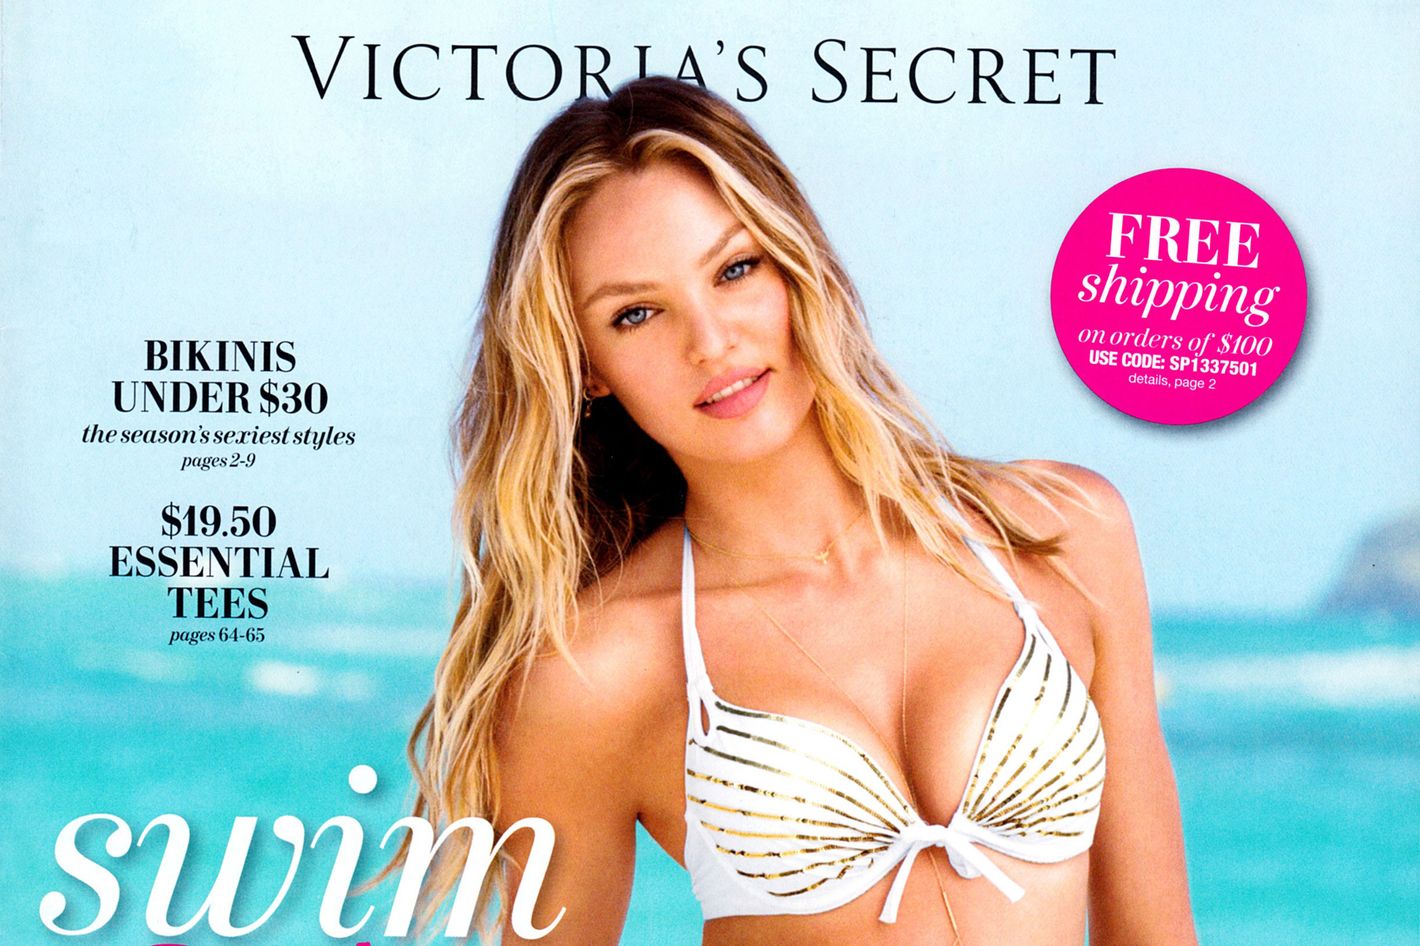 The Victoria's Secret Catalog is Dead